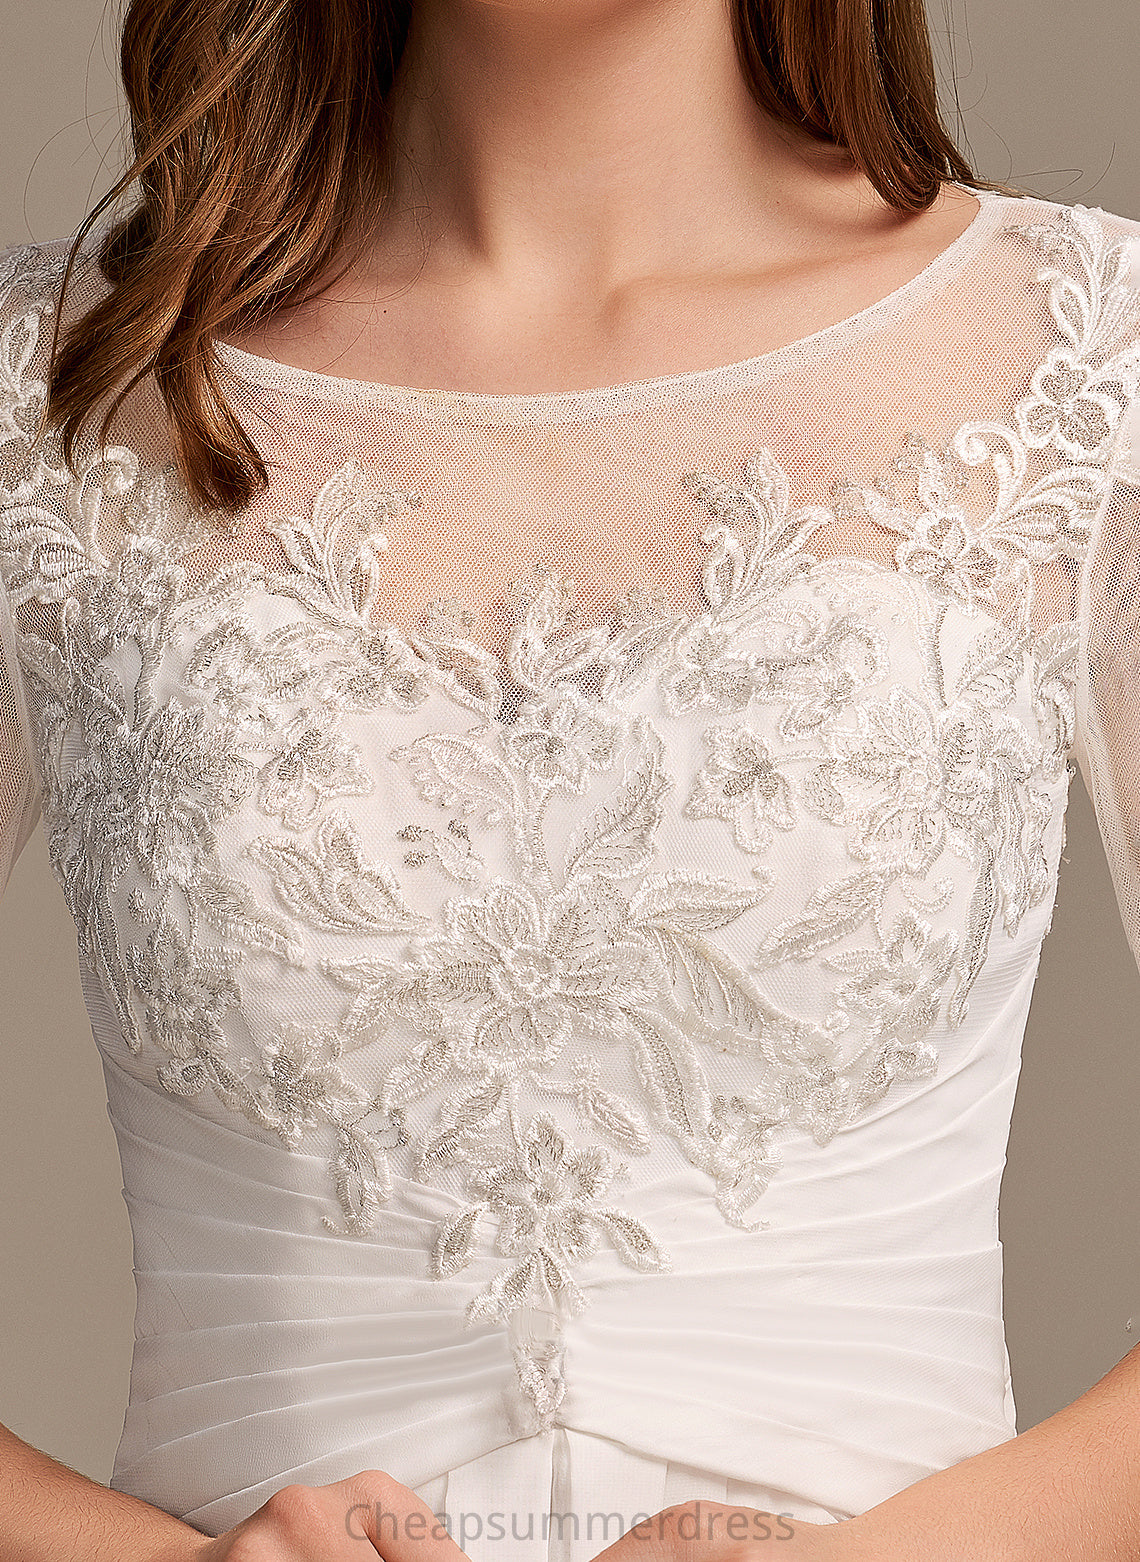 With Chiffon Illusion A-Line Wedding Cristina Wedding Dresses Dress Lace Asymmetrical